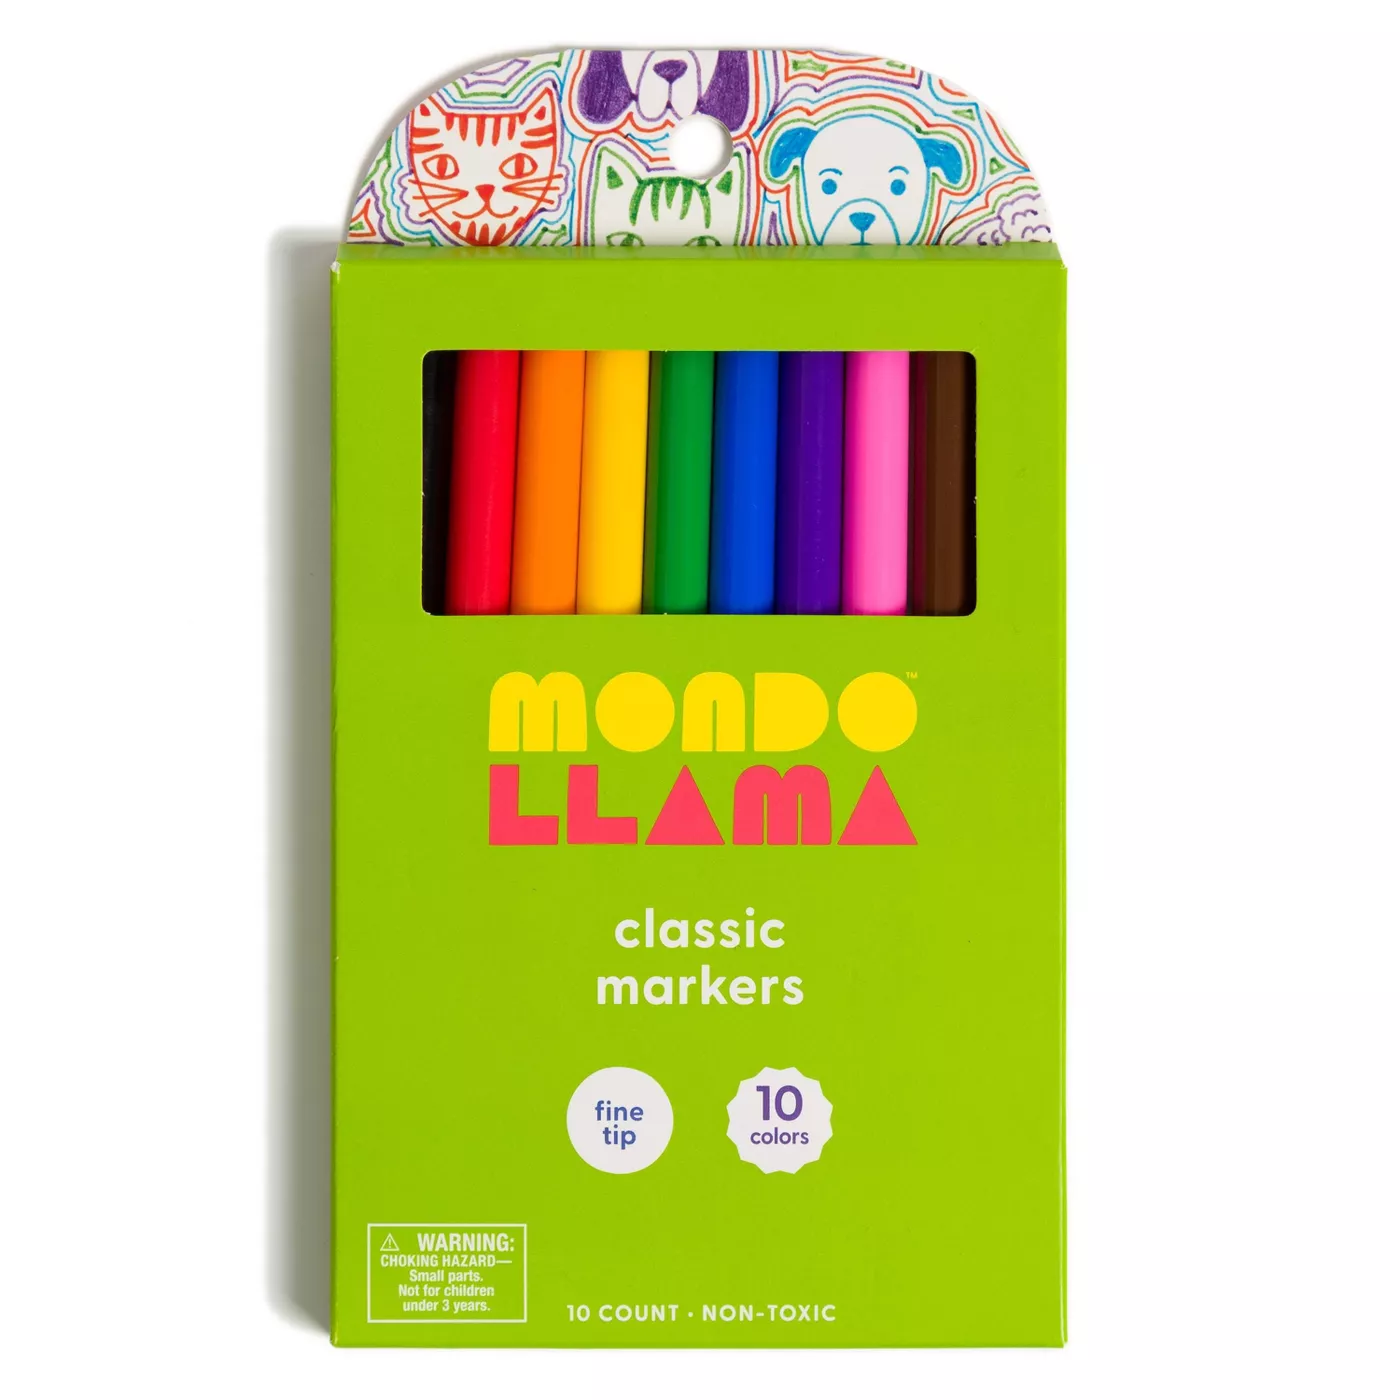 Mondo Llama markers